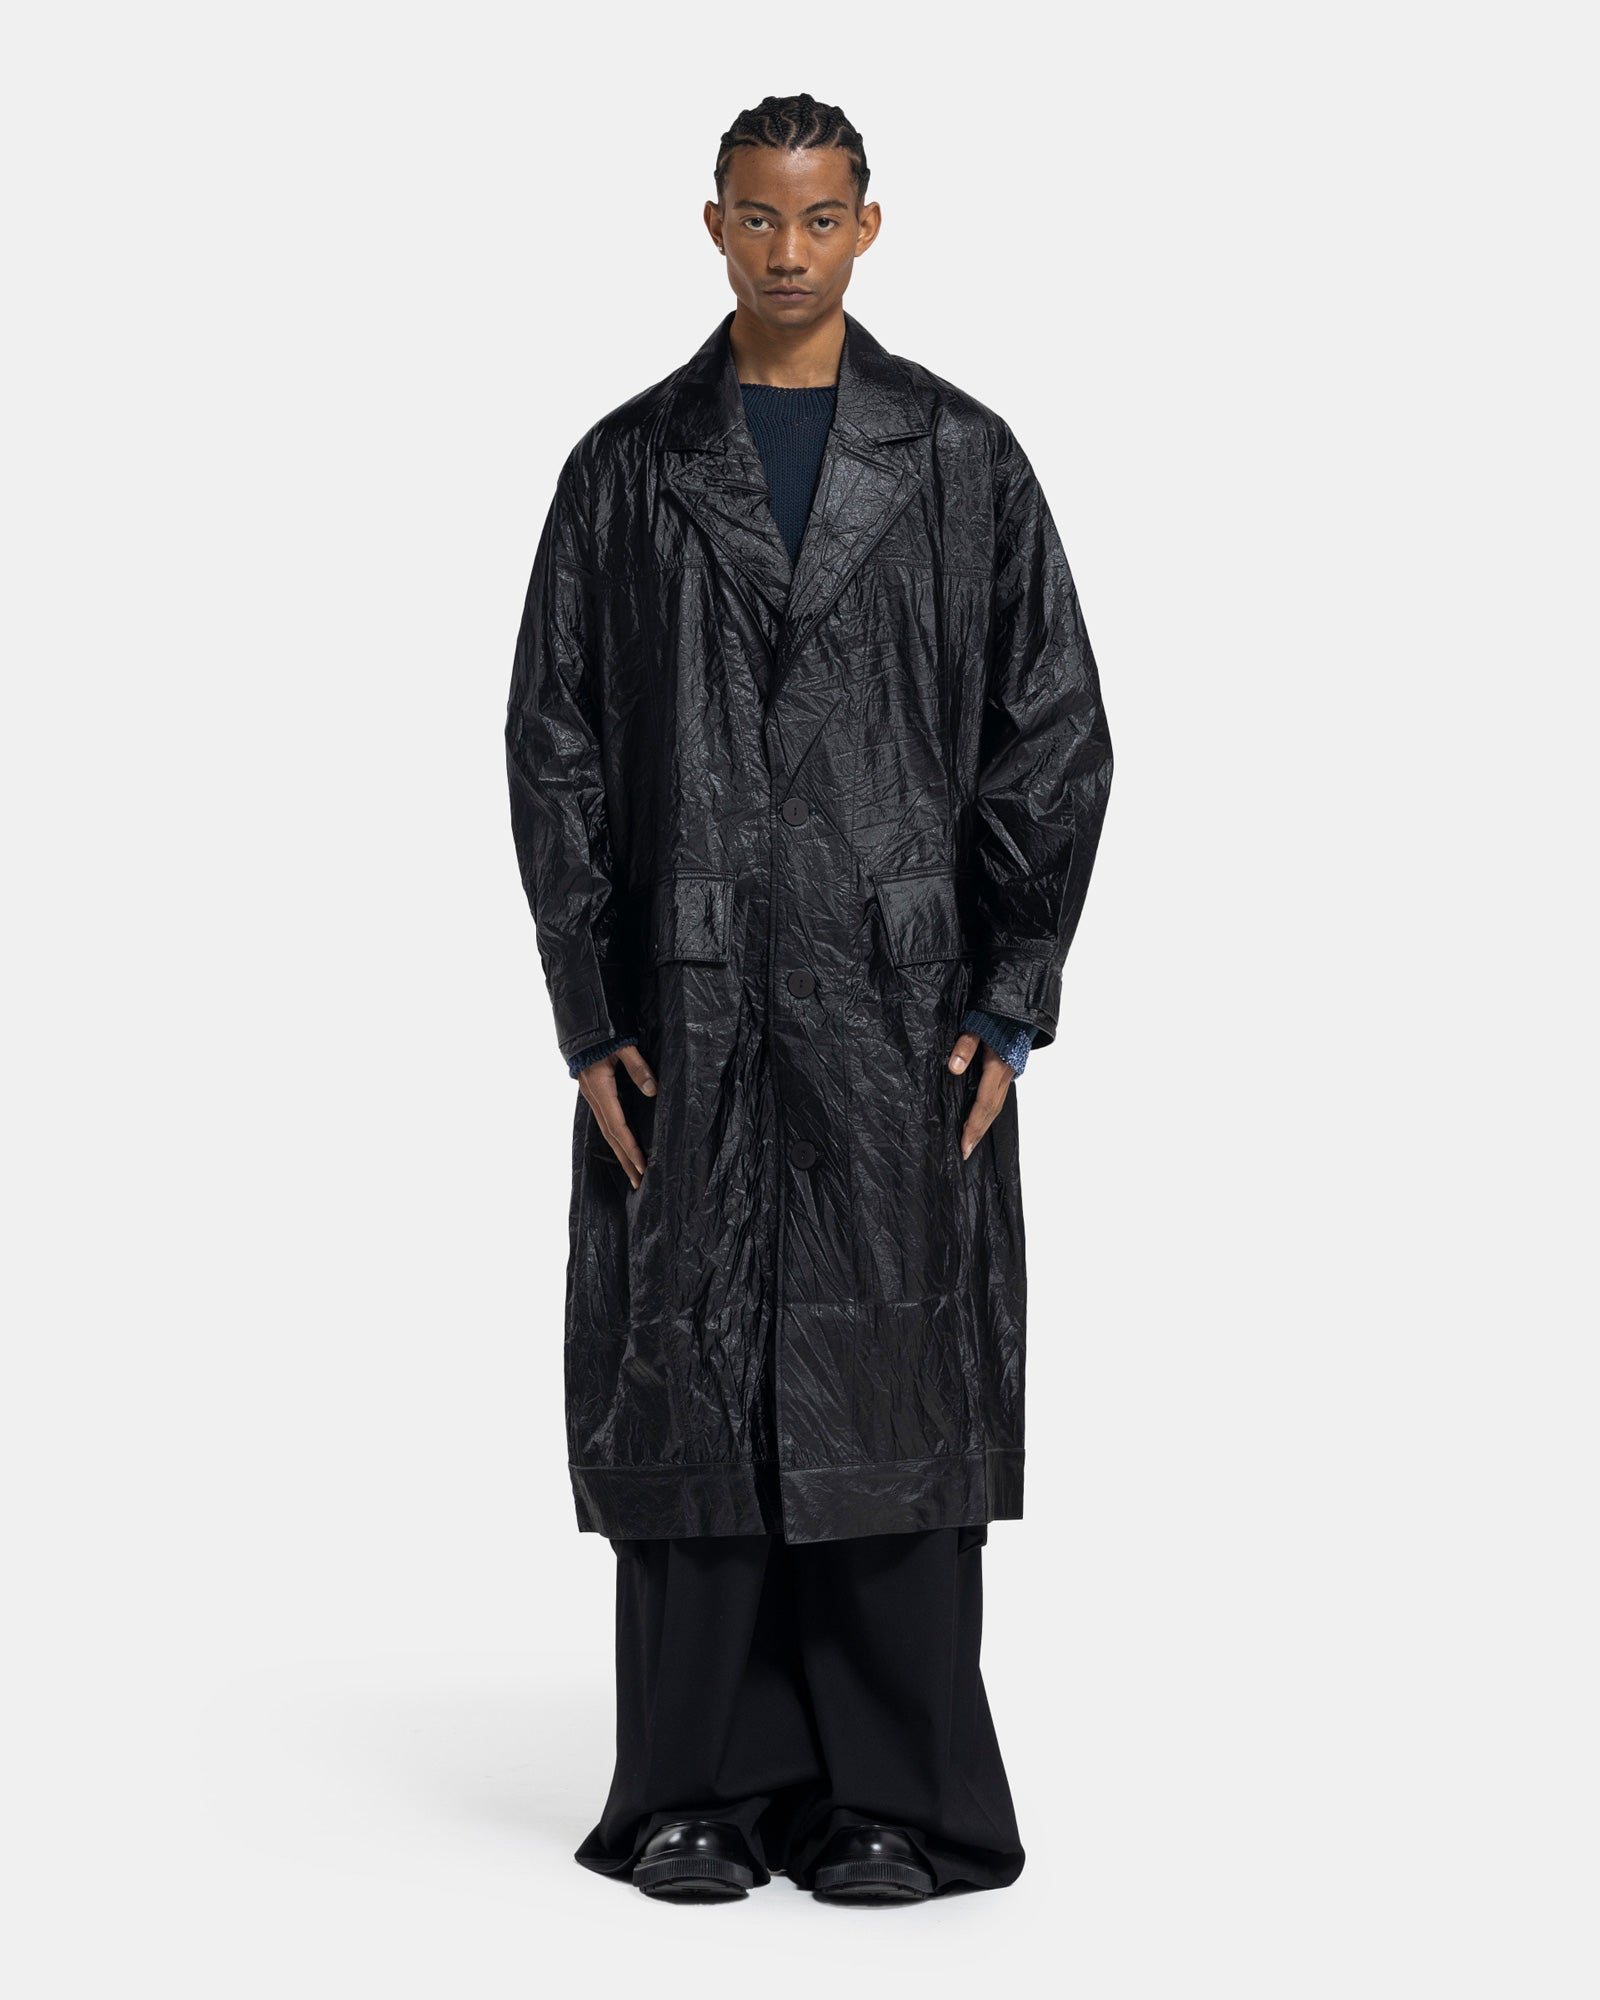 Male model wearing ECKHAUS LATTA black crinkle trench on white background